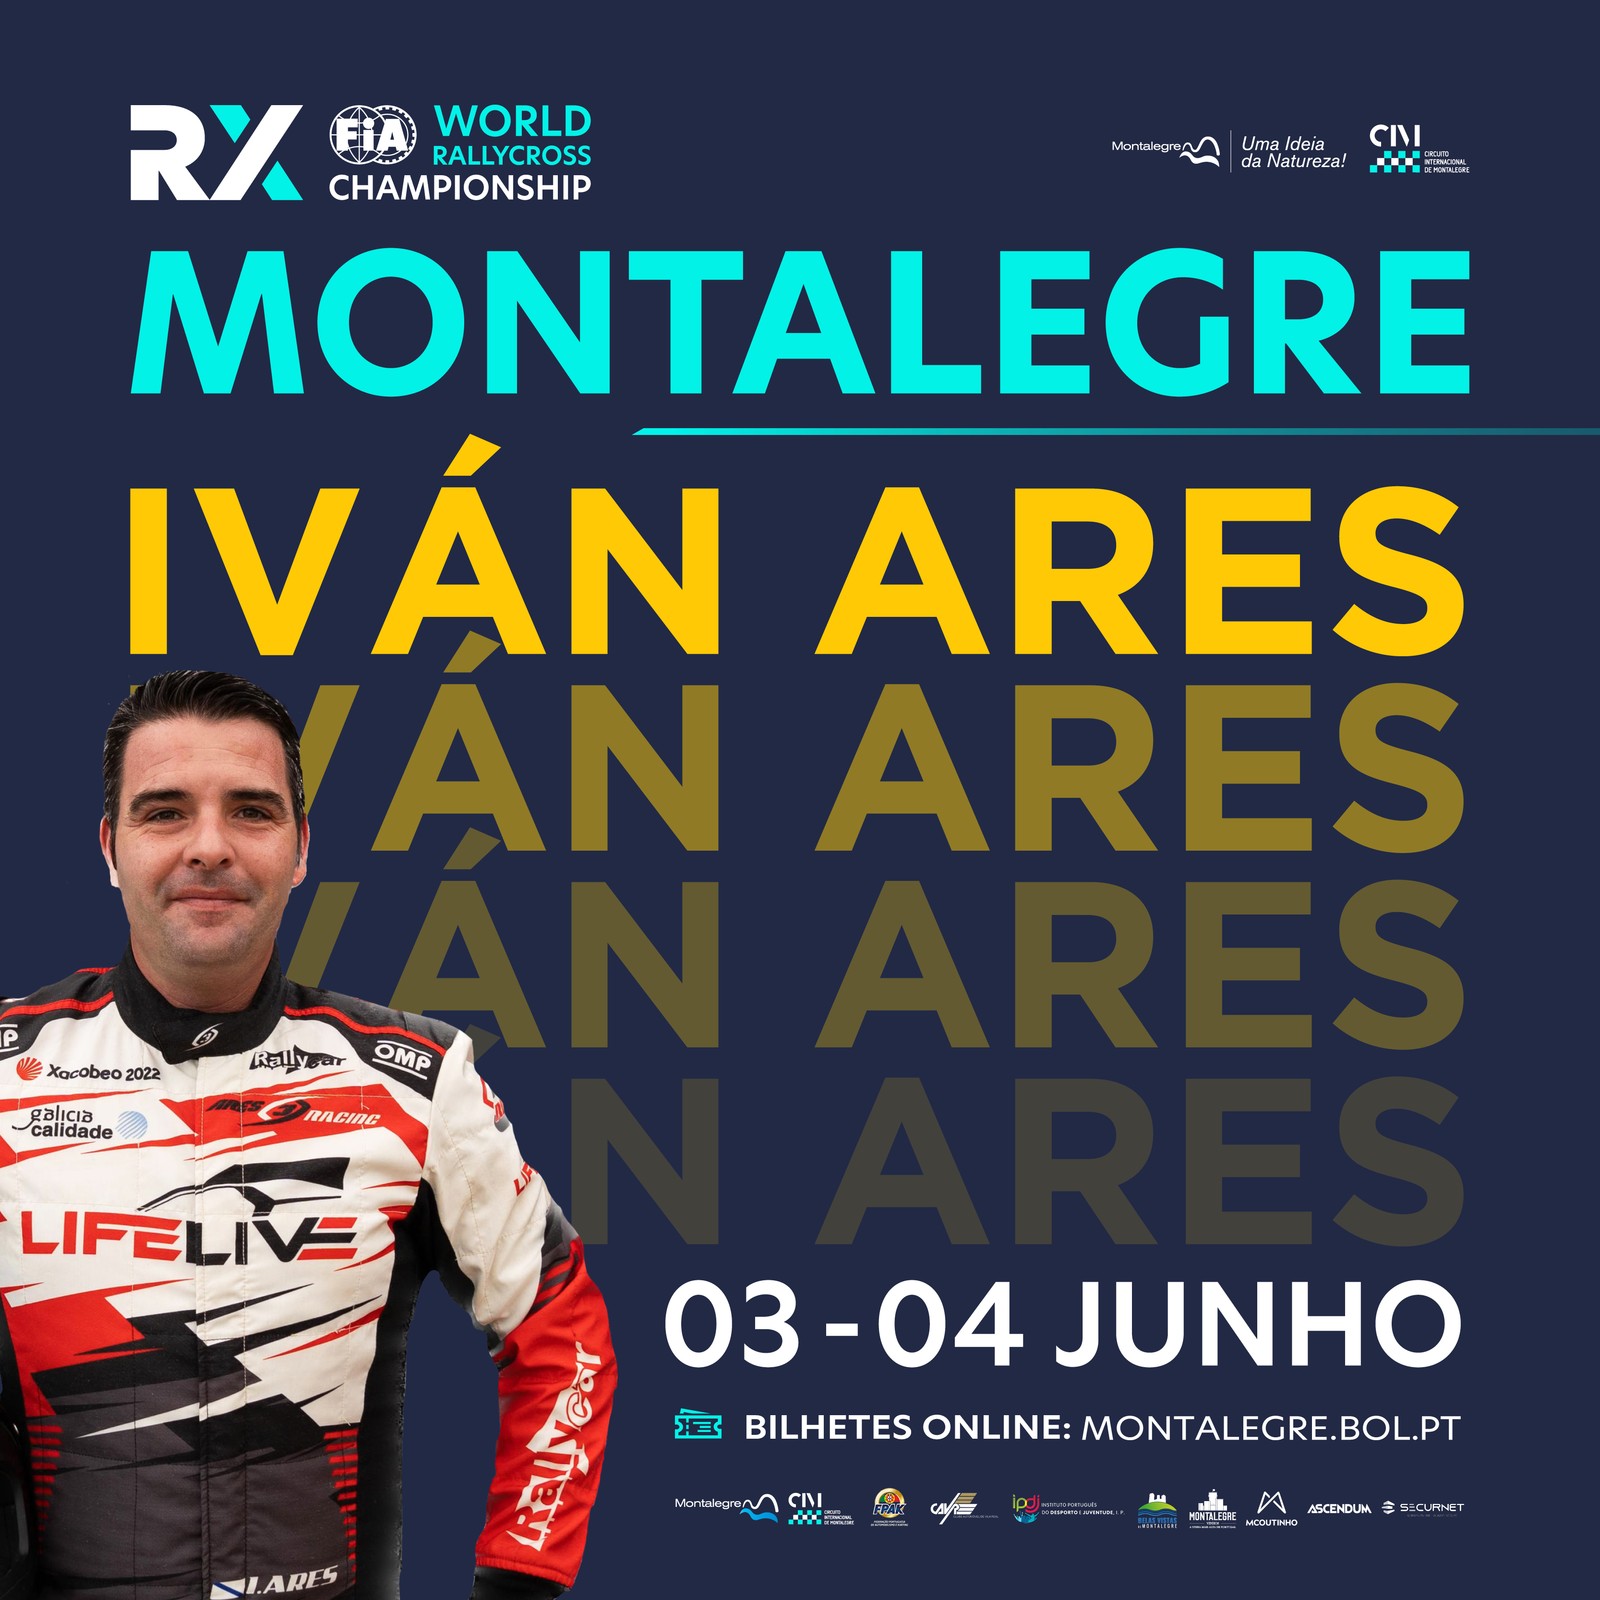 REALIZADO] Bilhetes FIA World Rallycross Championship / Portugal /  Montalegre 2023 - Pista Automóvel de Montalegre